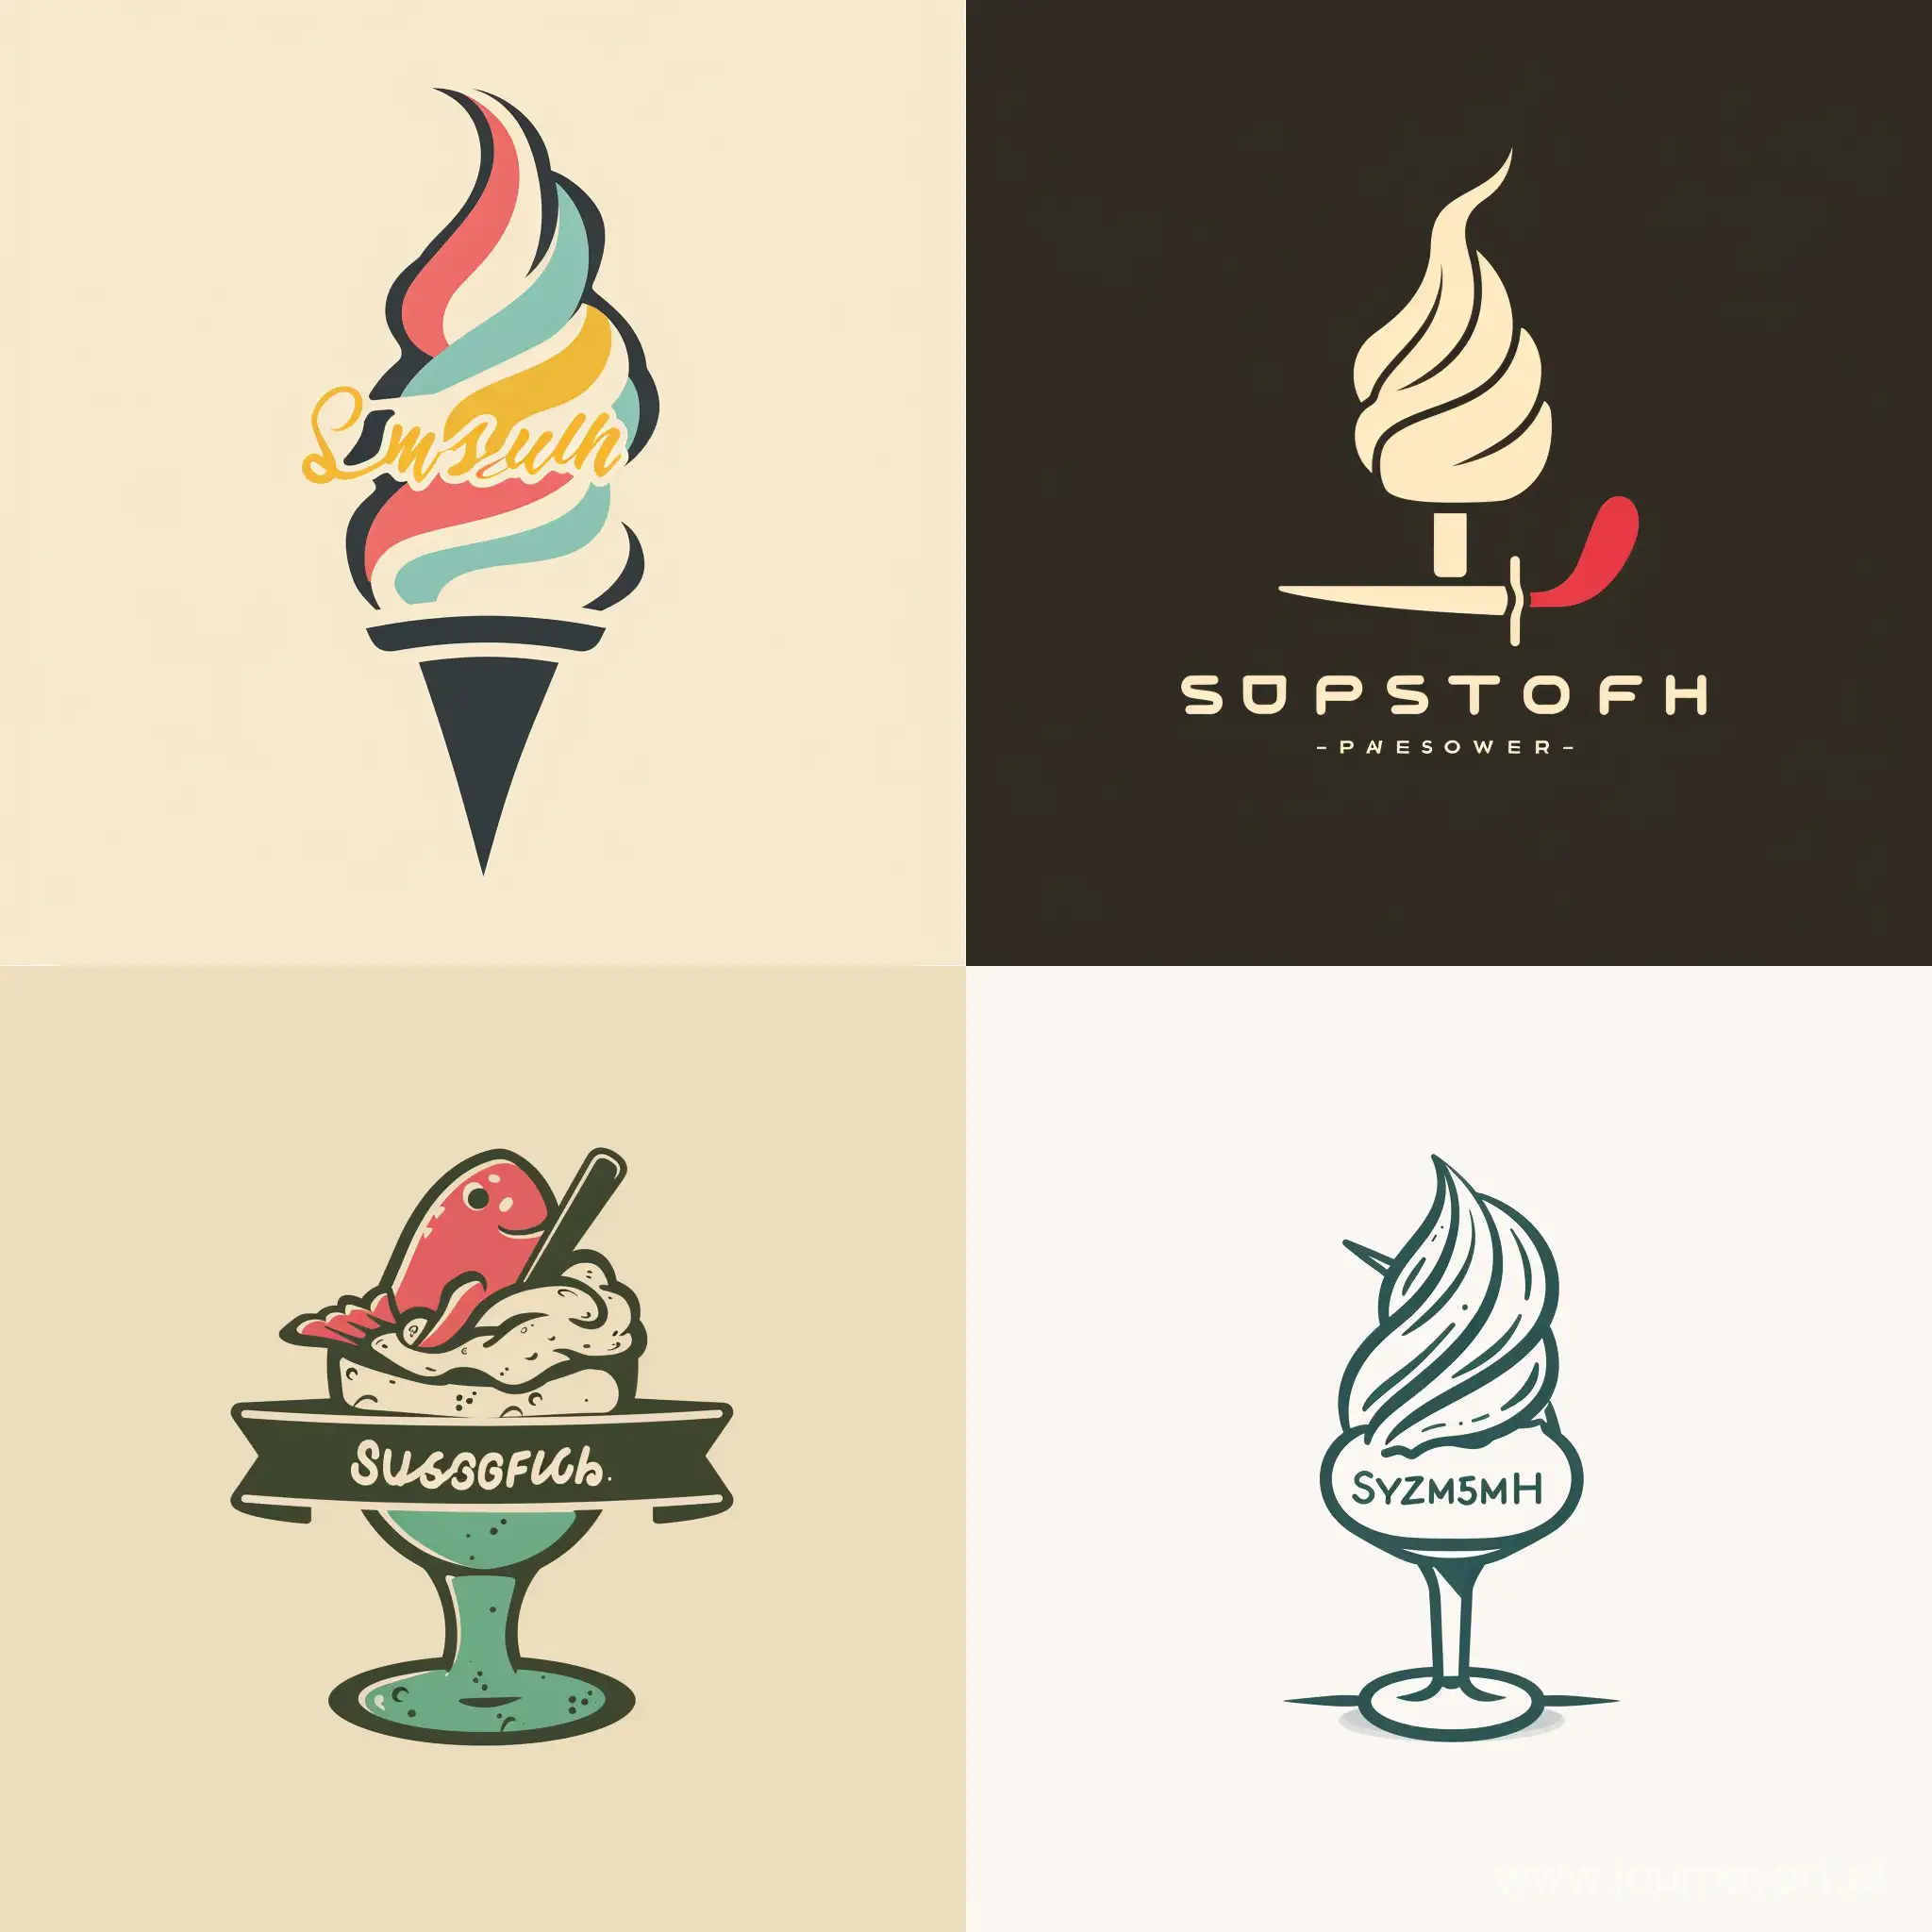 minimalist logo in retro style for a frozen yoghurt shop called Swordfish